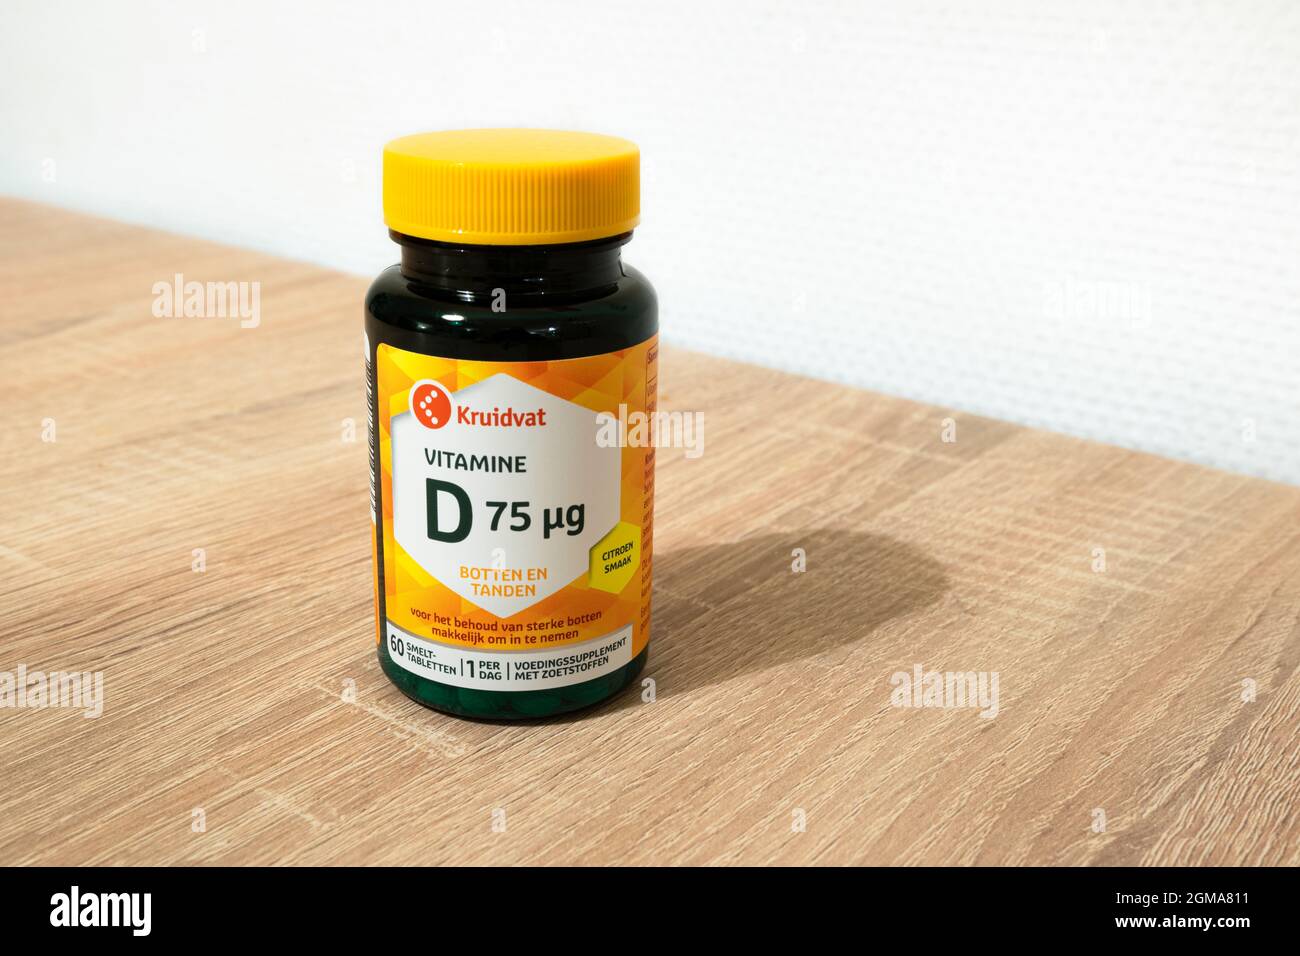 Bottle vitamine D the brand Kruidvat on a table Photo - Alamy